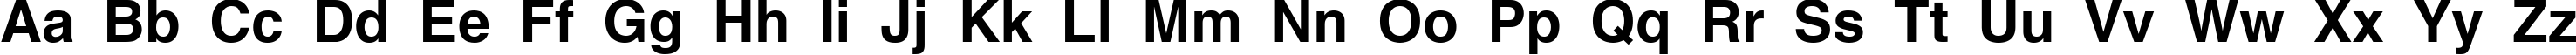 Пример написания английского алфавита шрифтом AGHlvCyrillic Bold